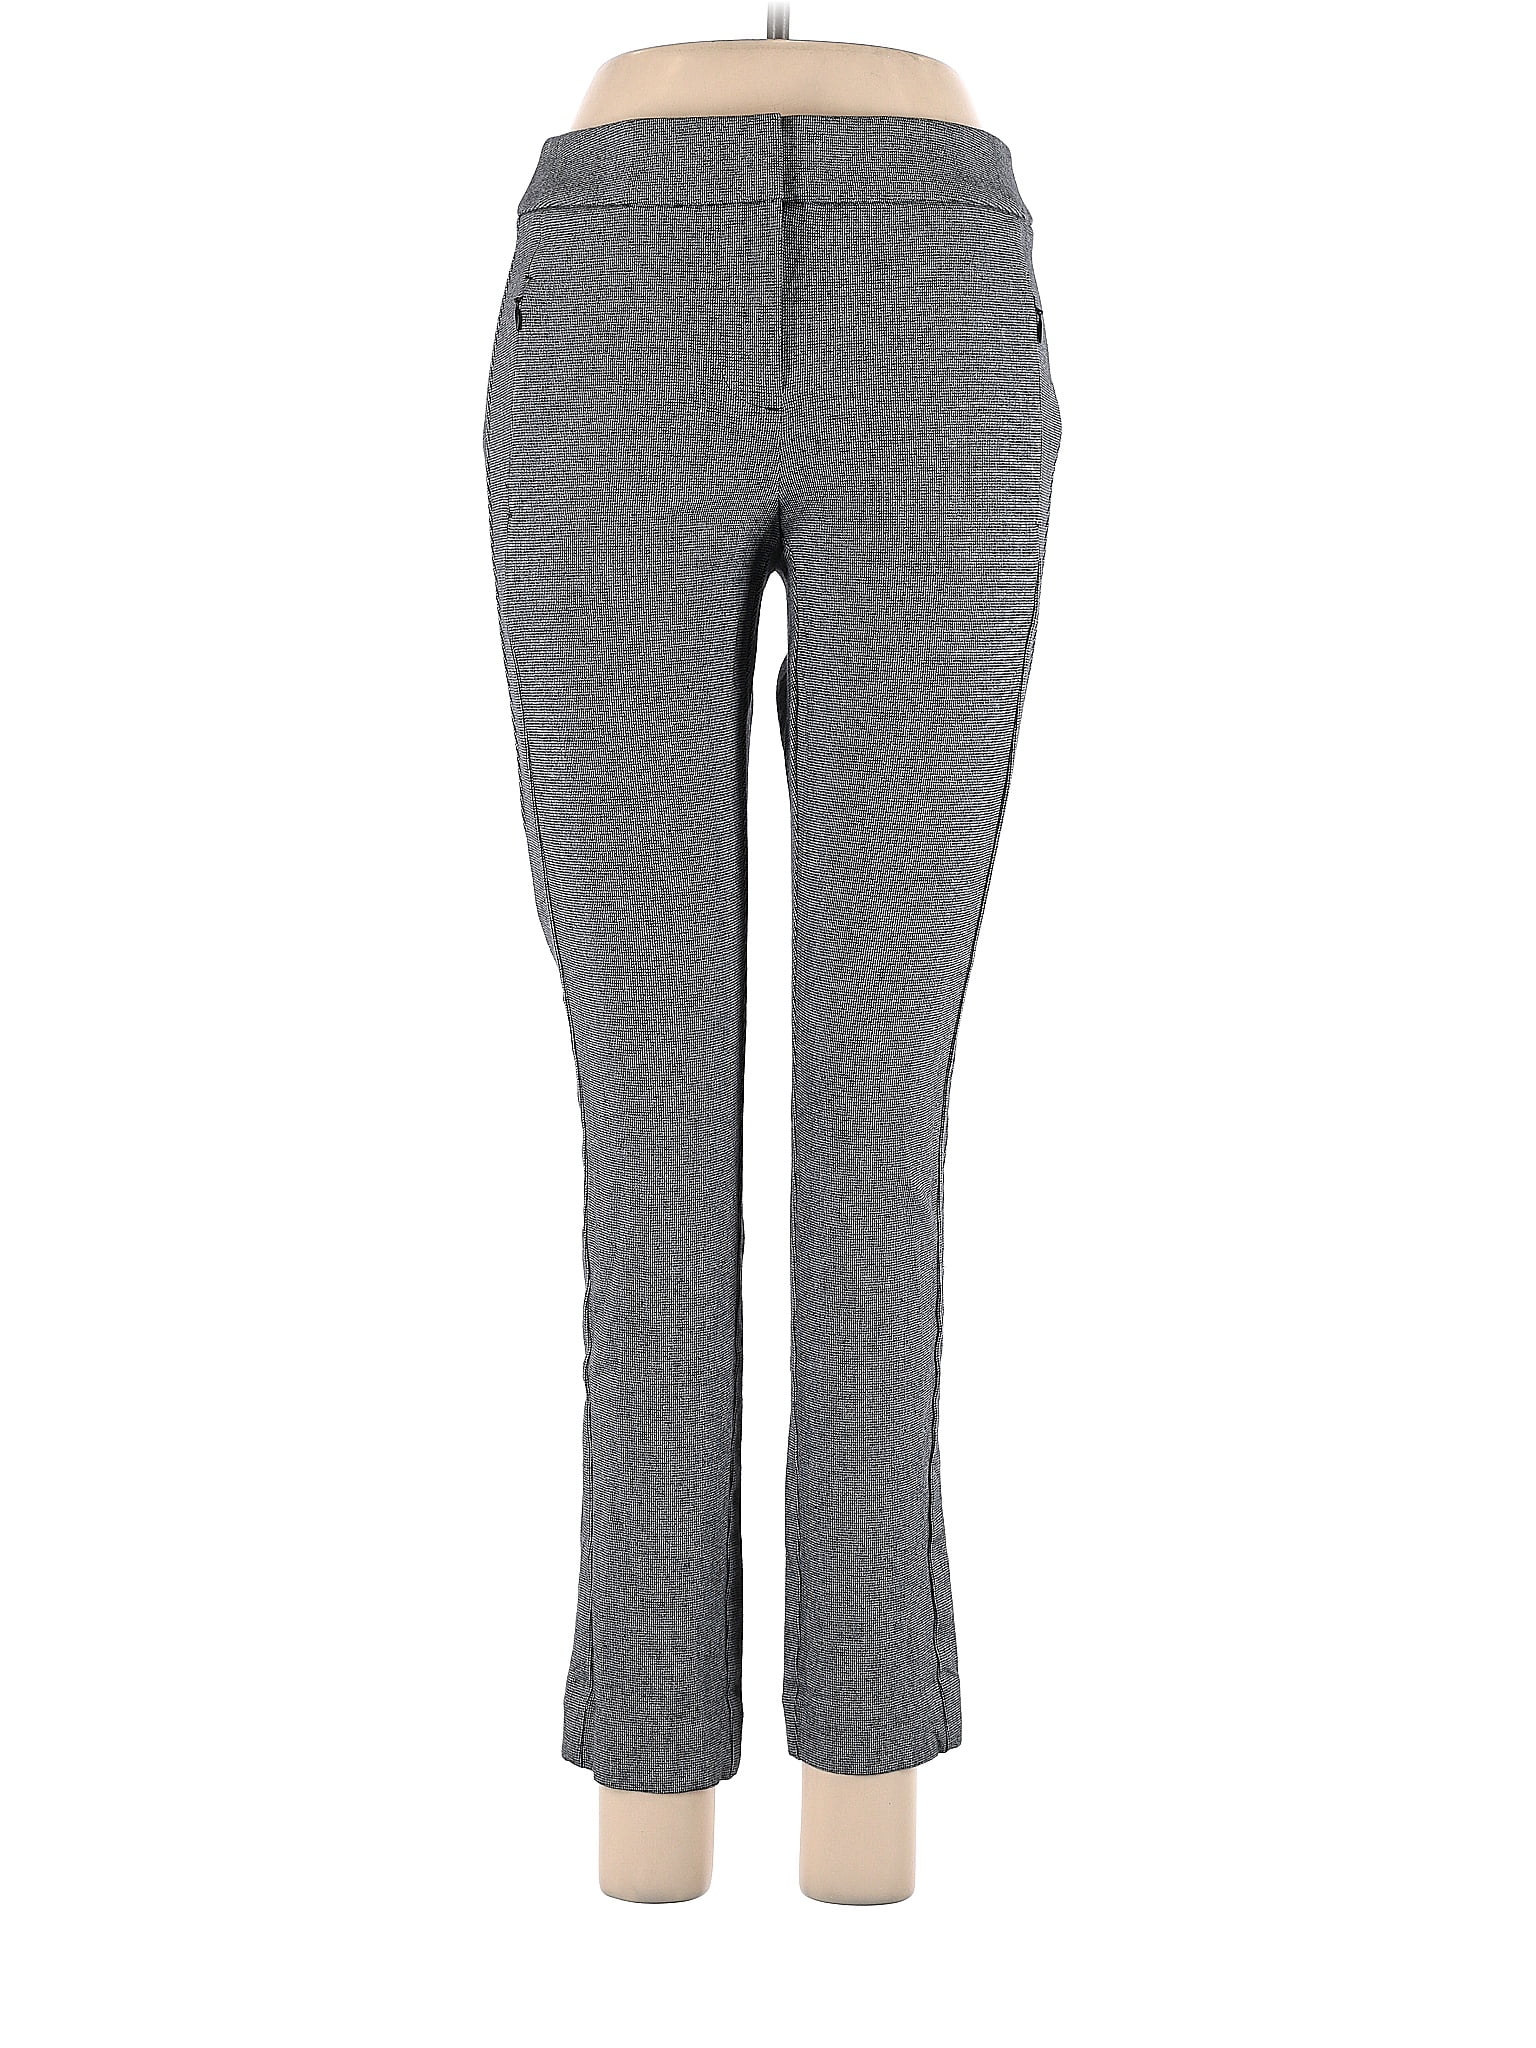 Ann Taylor LOFT Gray Dress Pants Size 0 - 70% off | thredUP